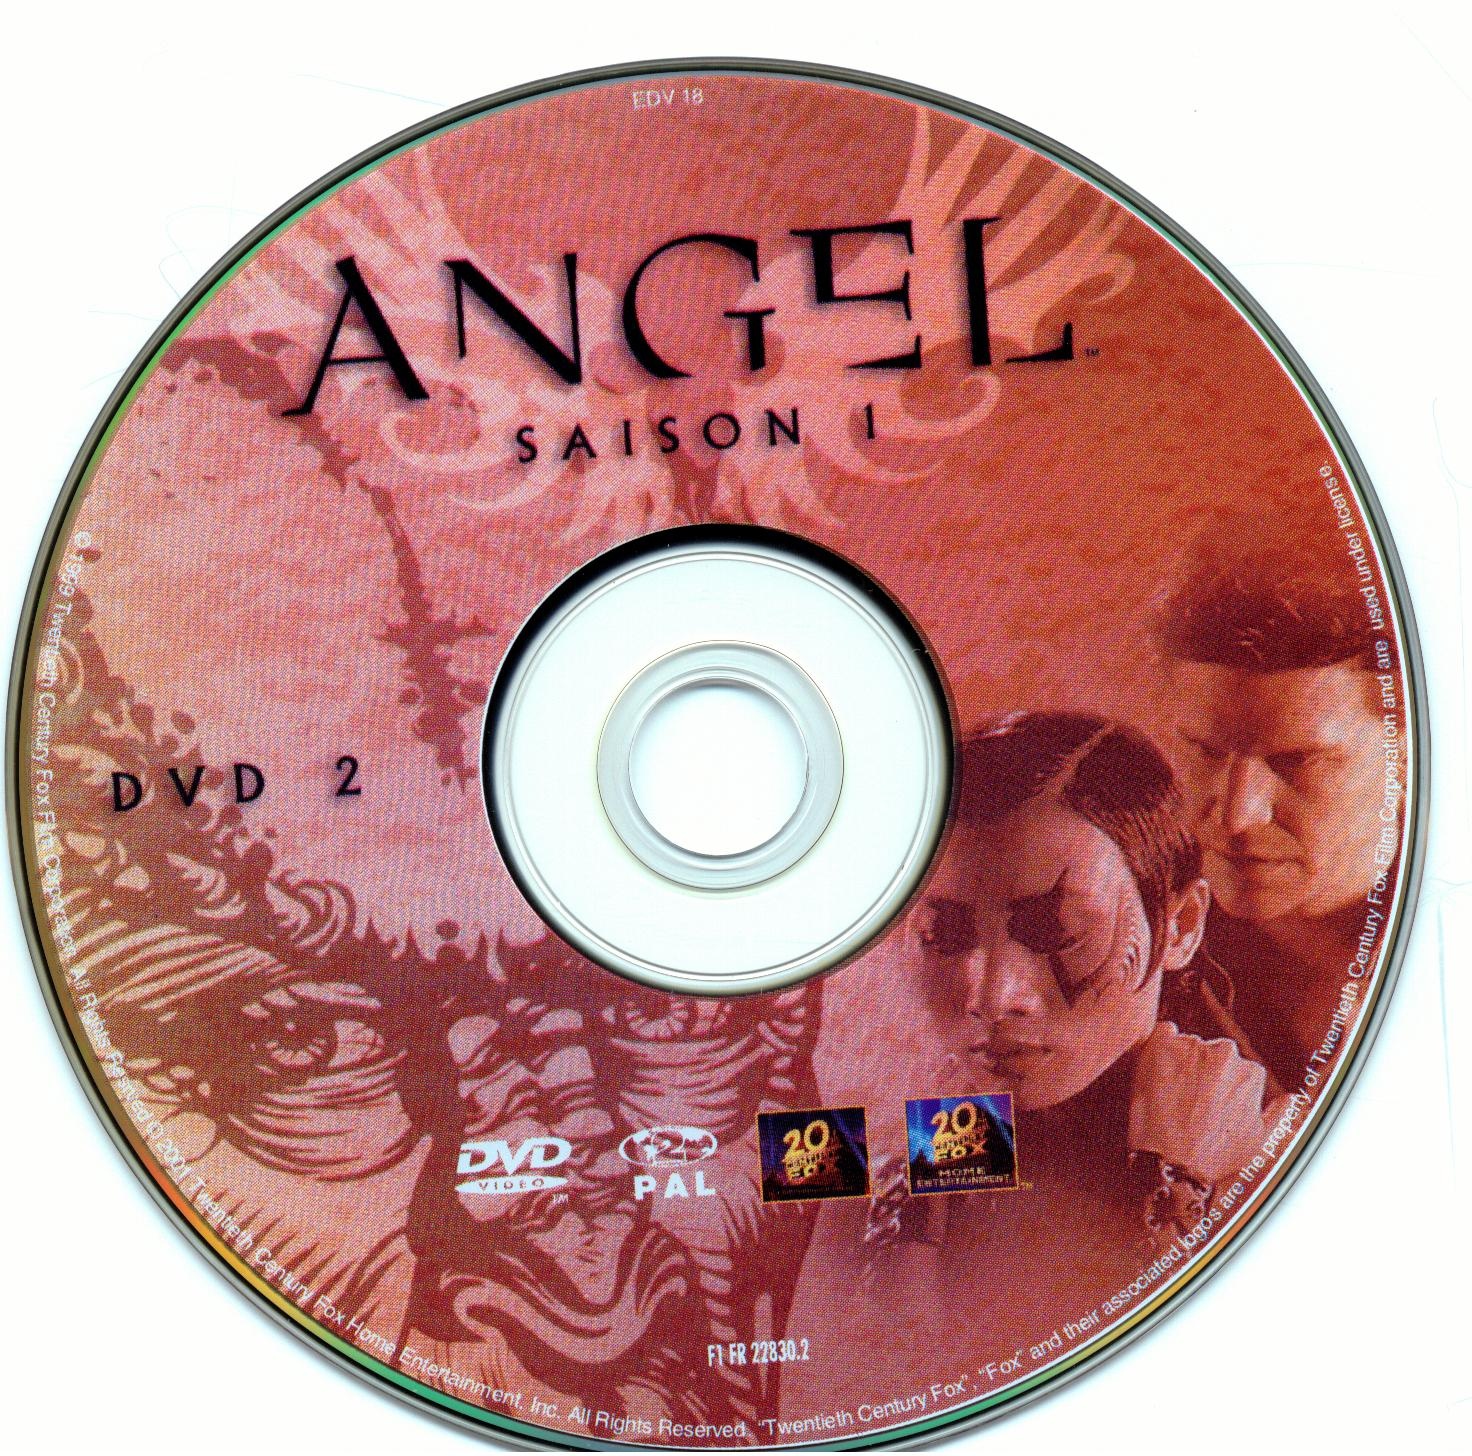 Angel Saison 1 dvd 2